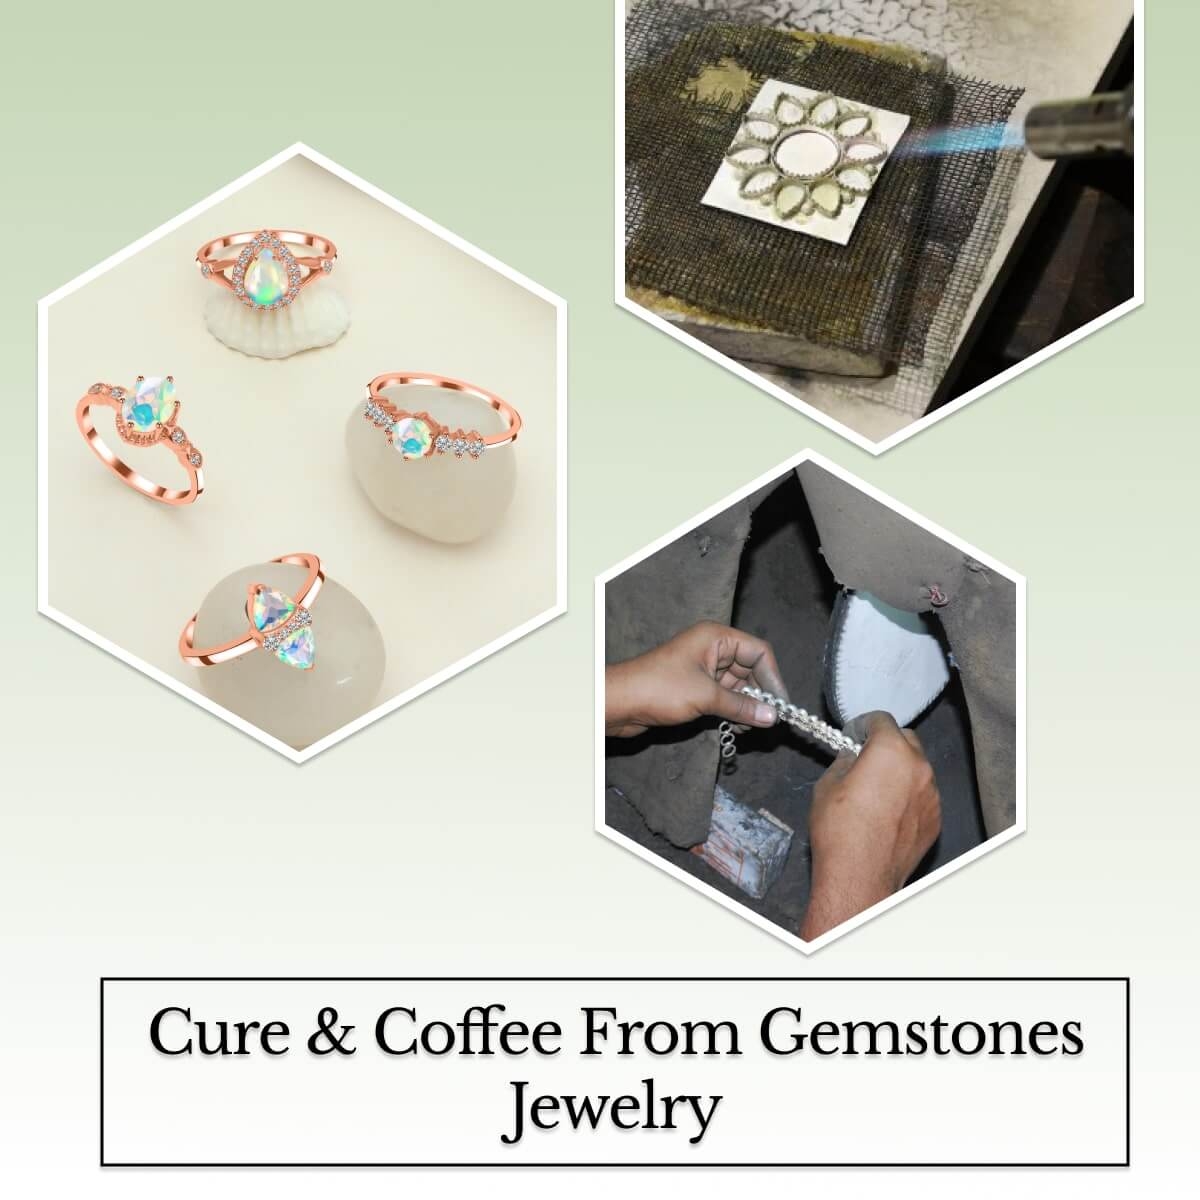 Health Benefits Of Wearing Gemstone jewelry?